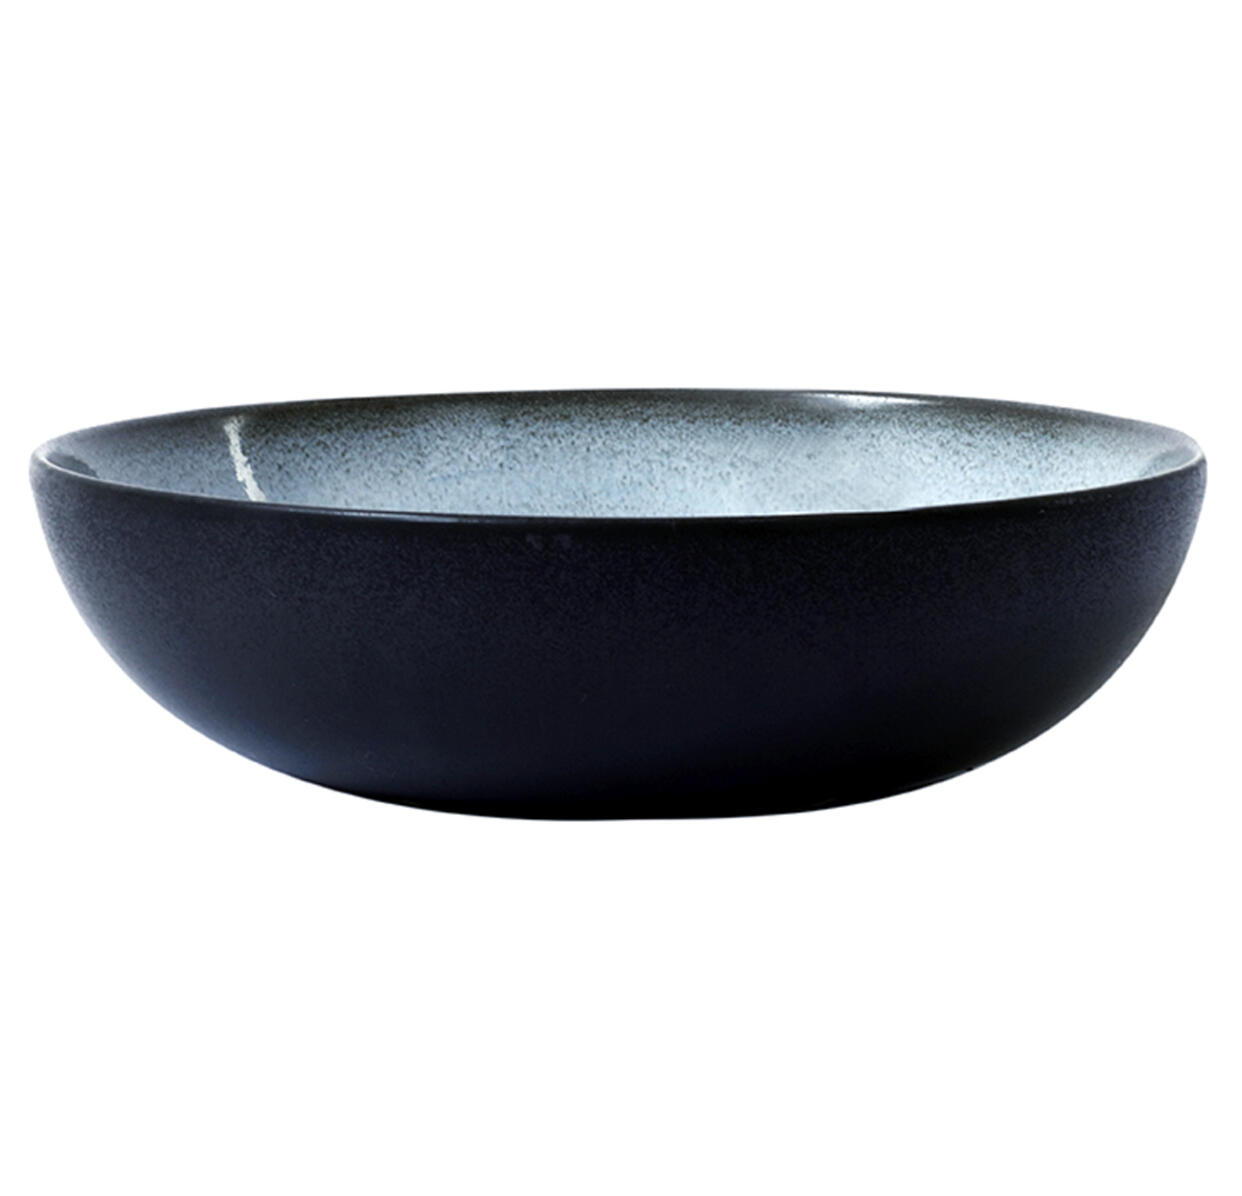 serve bowl tourron ecorce ceramic manufacturer